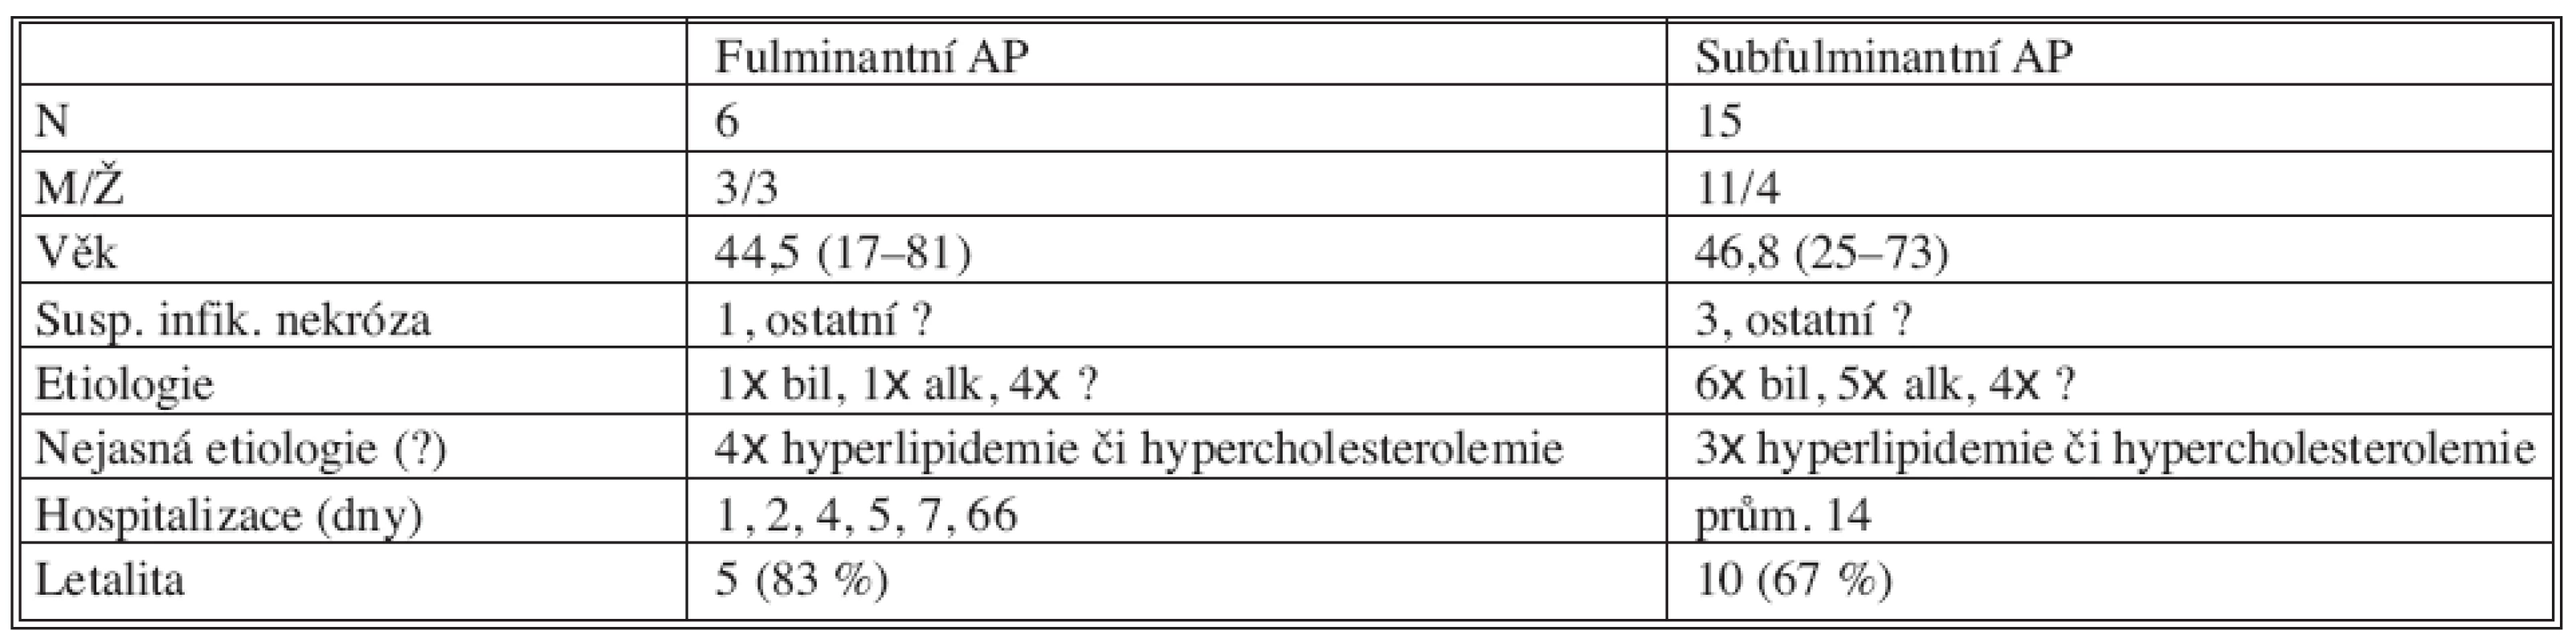 Analýza souboru ESAP
Tab. 2. The early severe acute pancreatitis (ESAP) group of subjects